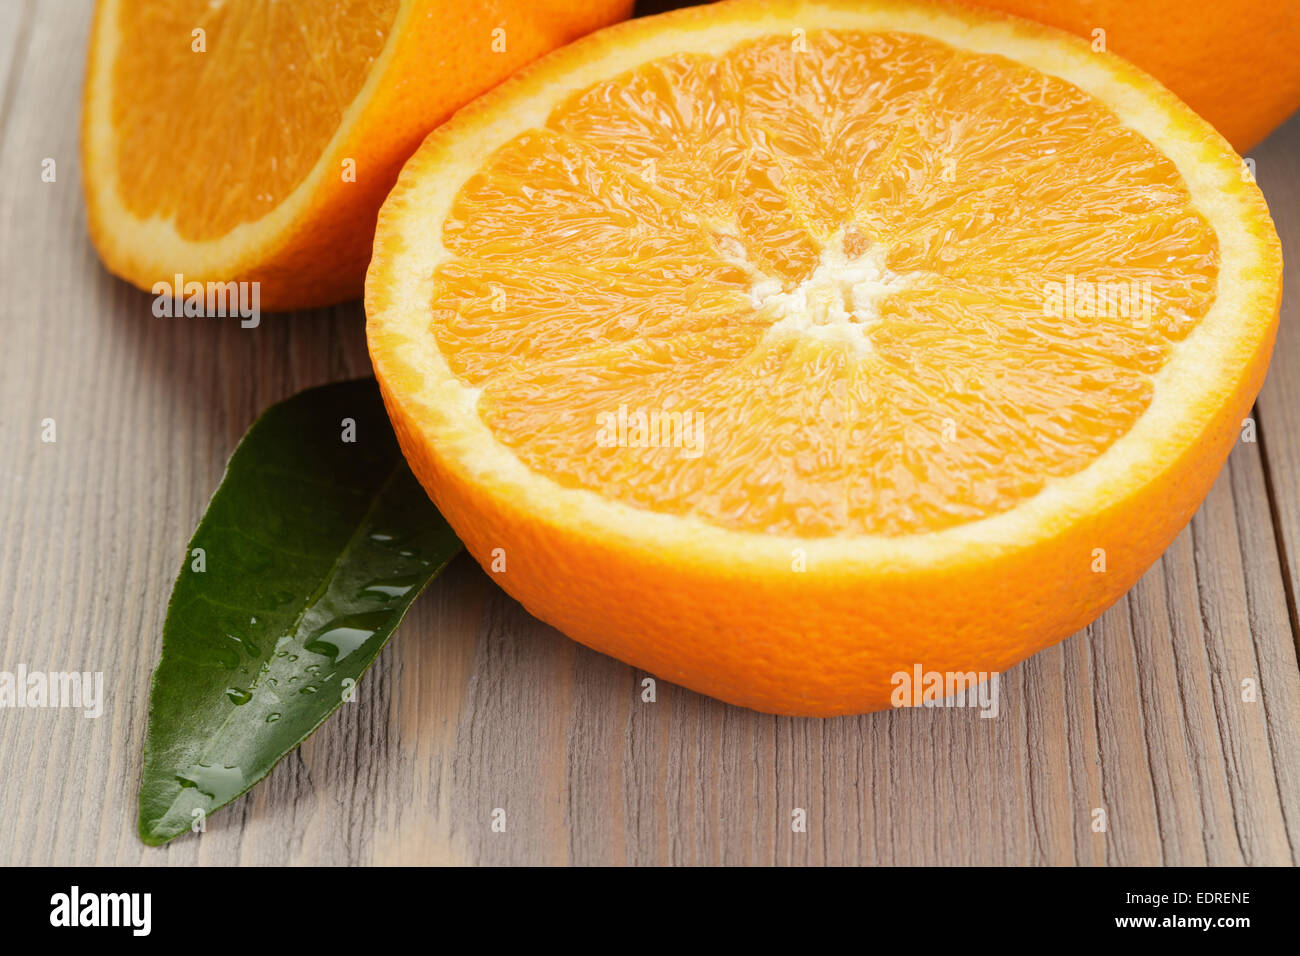 ripe spanish oranges on wood table, rustic photo Stock Photo